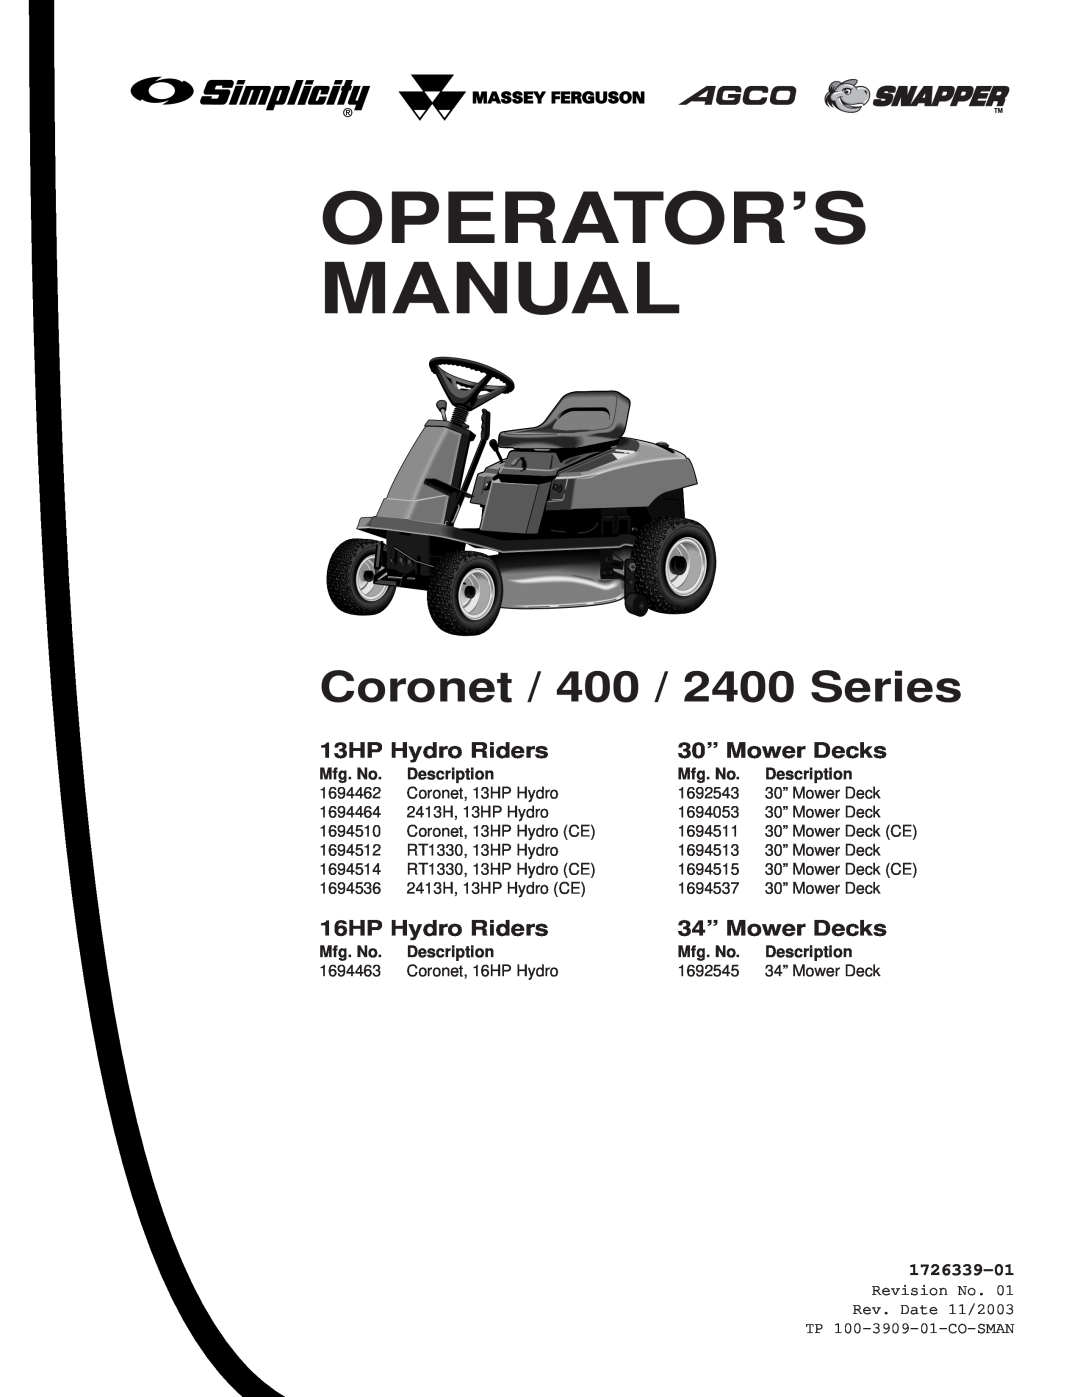 Snapper manual Operator’S Manual, Coronet / 400 / 2400 Series, 1726339-01, Revision No. Rev. Date 11/2003 